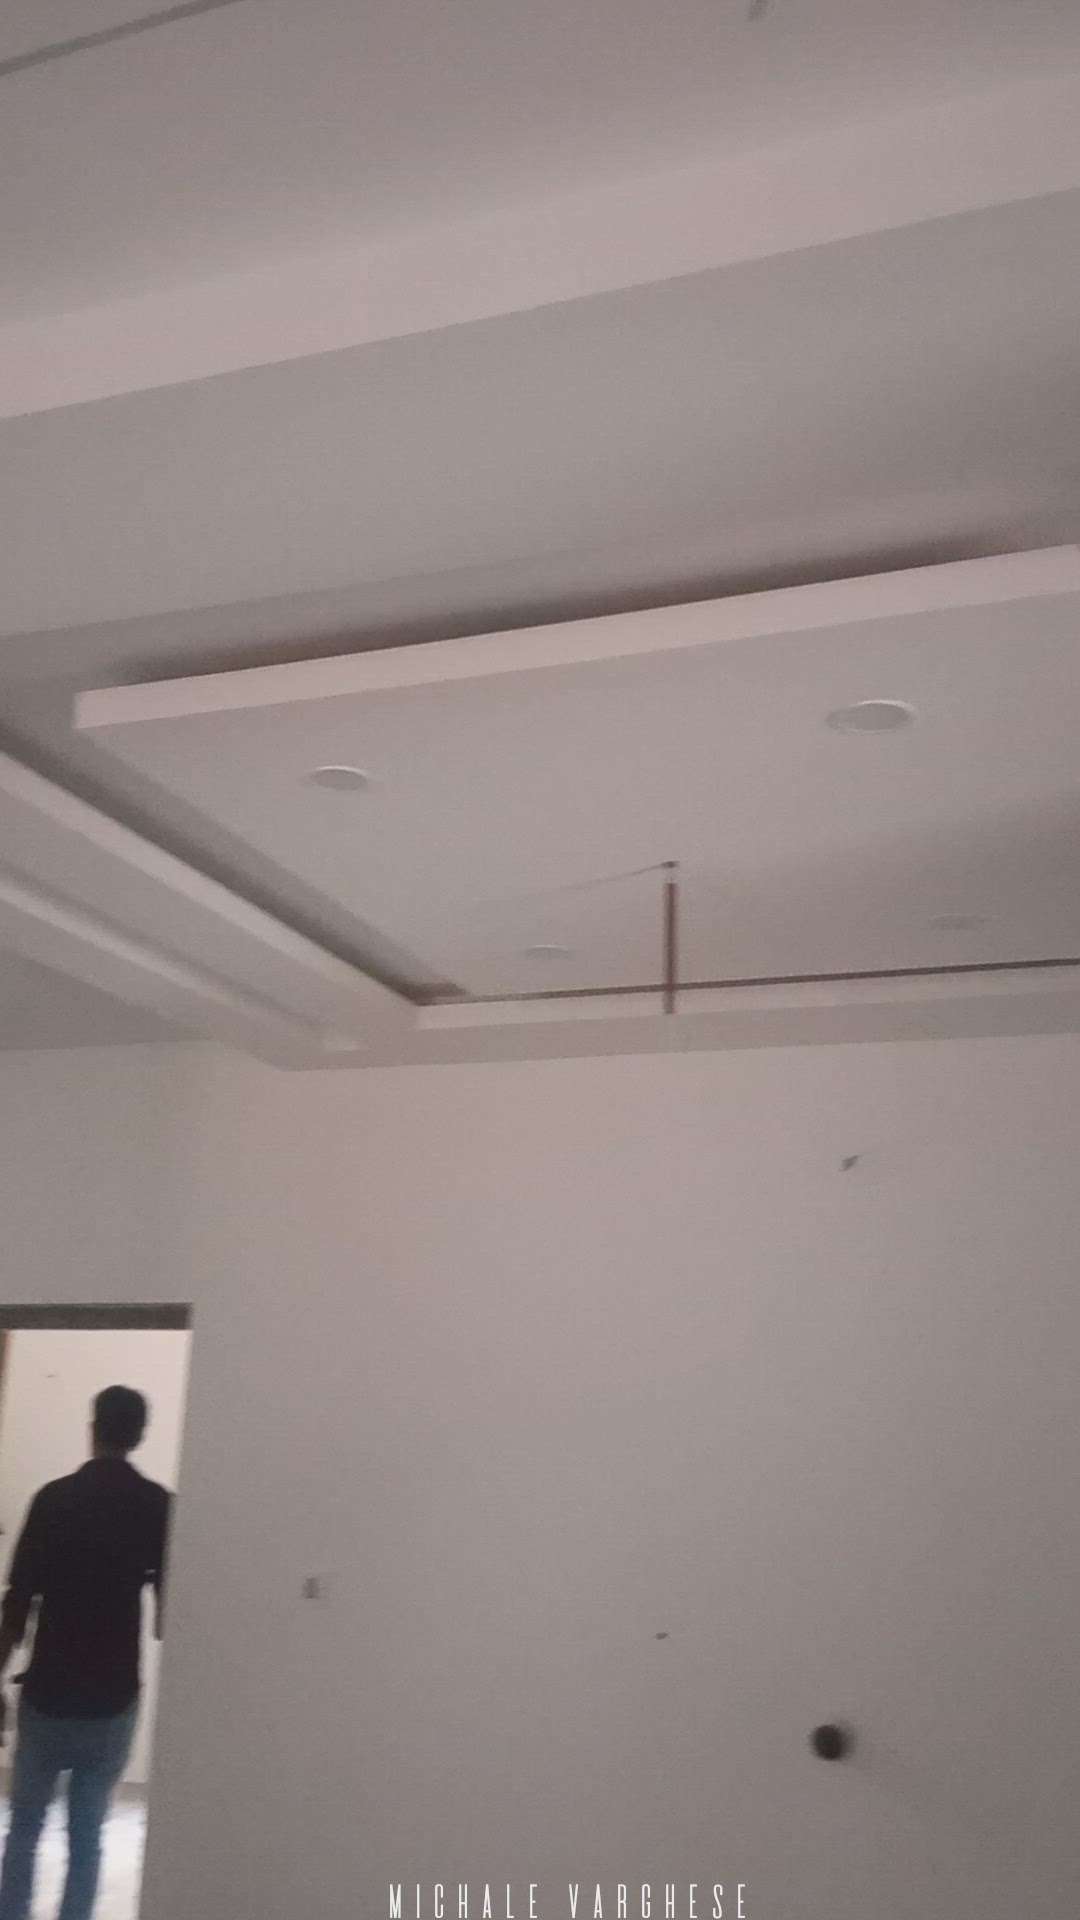 gypsom ceiling 
.
#GypsumCeiling #gypsumciling #gypsumceilingworks #gypsumwork #gypsomceling #FloorPlans #floorplan #3Dfloorplans #3Dinterior #3dinteriordesign #3dfloorplan #amazing3ddrawing #koloapp #ar_michale_varghese #ar_michale_varghese #keralainteriordesingz #KeralaStyleHouse #keralaarchitectures #keralainterior #InteriorDesigner #Architect #interiordesign  #KitchenInterior #LivingroomDesigns #BedroomDesigns #StaircaseDecors #cubboard #BalconyLighting # #vkerala_architecture #3drenders #renderlovers #High_quality_Elevation